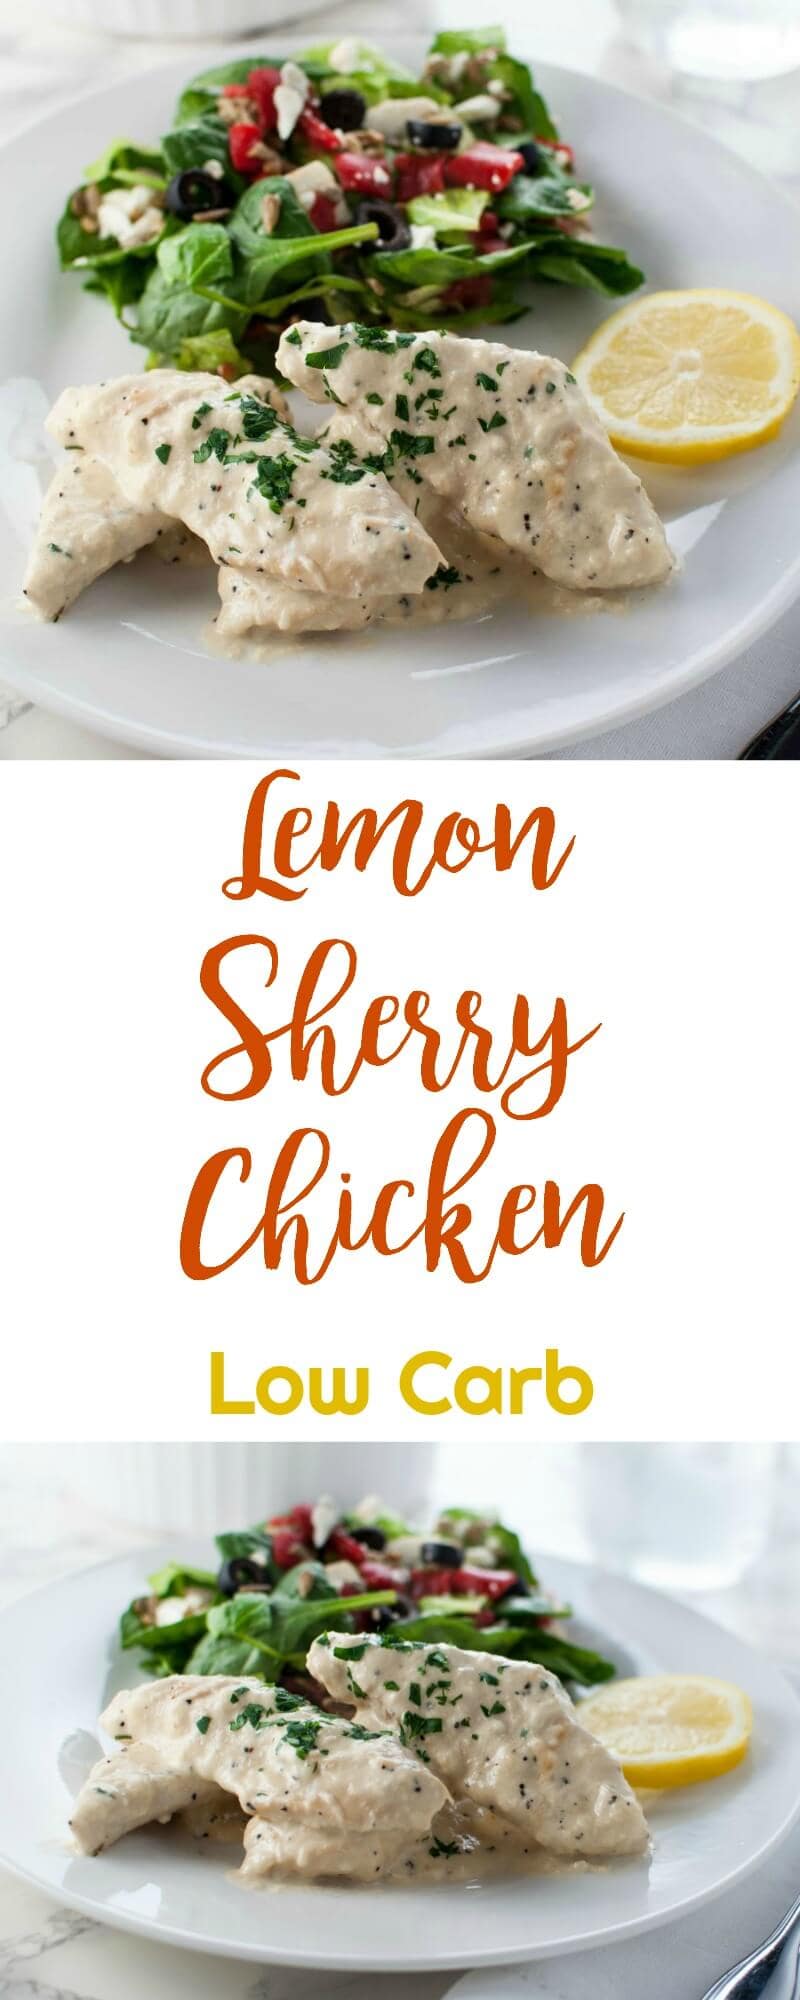 Lemon Sherry Chicken Recipe - Low Carb, Gluten Free